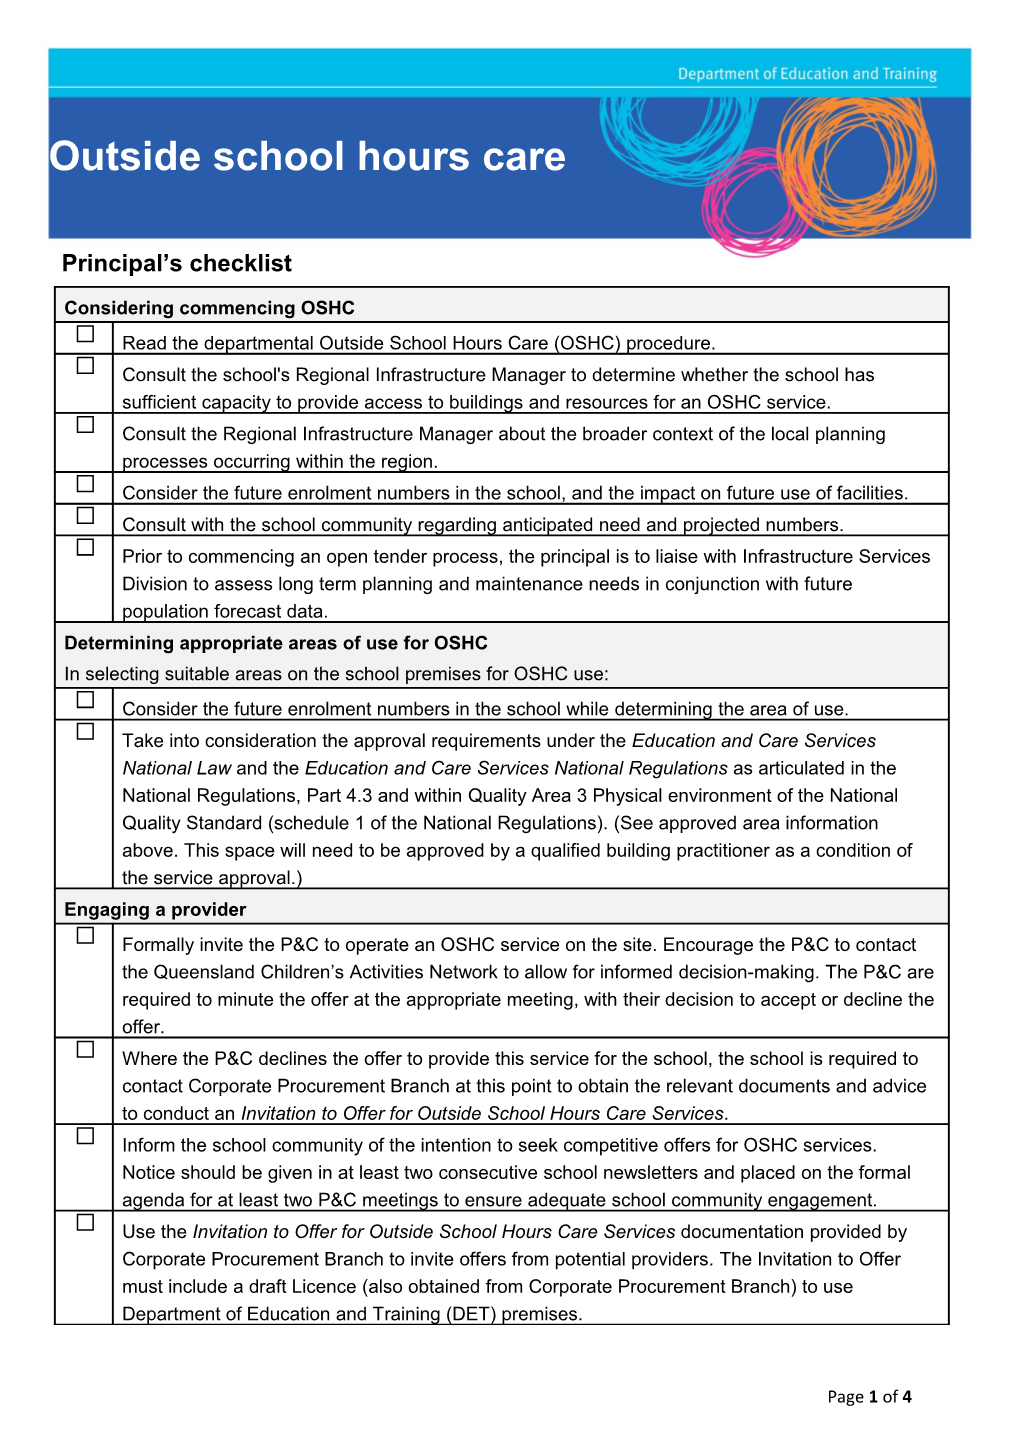 Outside School Hours Care - Principal's Checklist